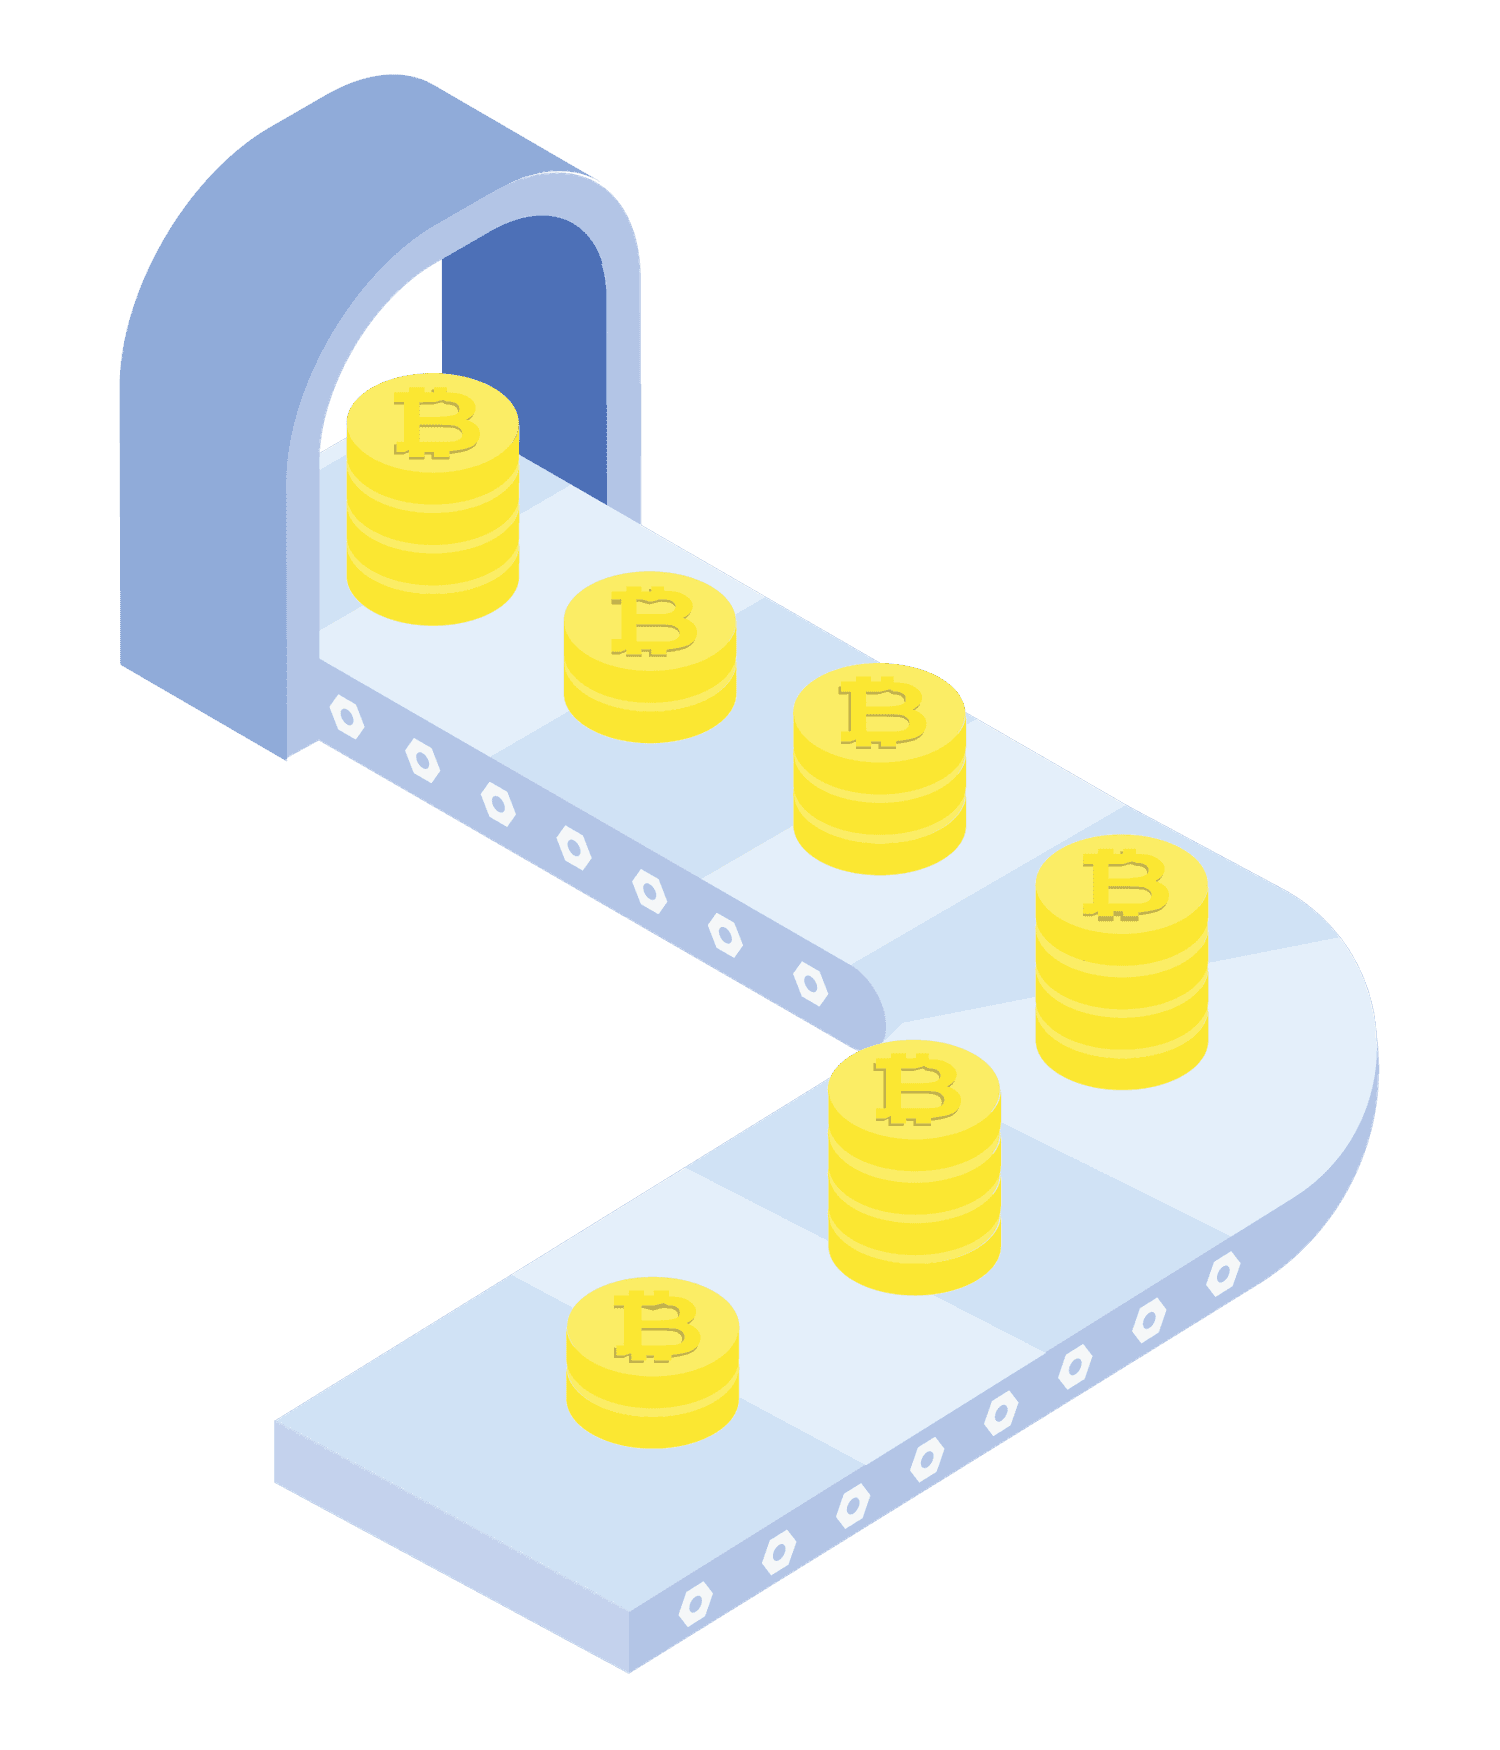 flat design illustration of stacked coins on a conveyor belt